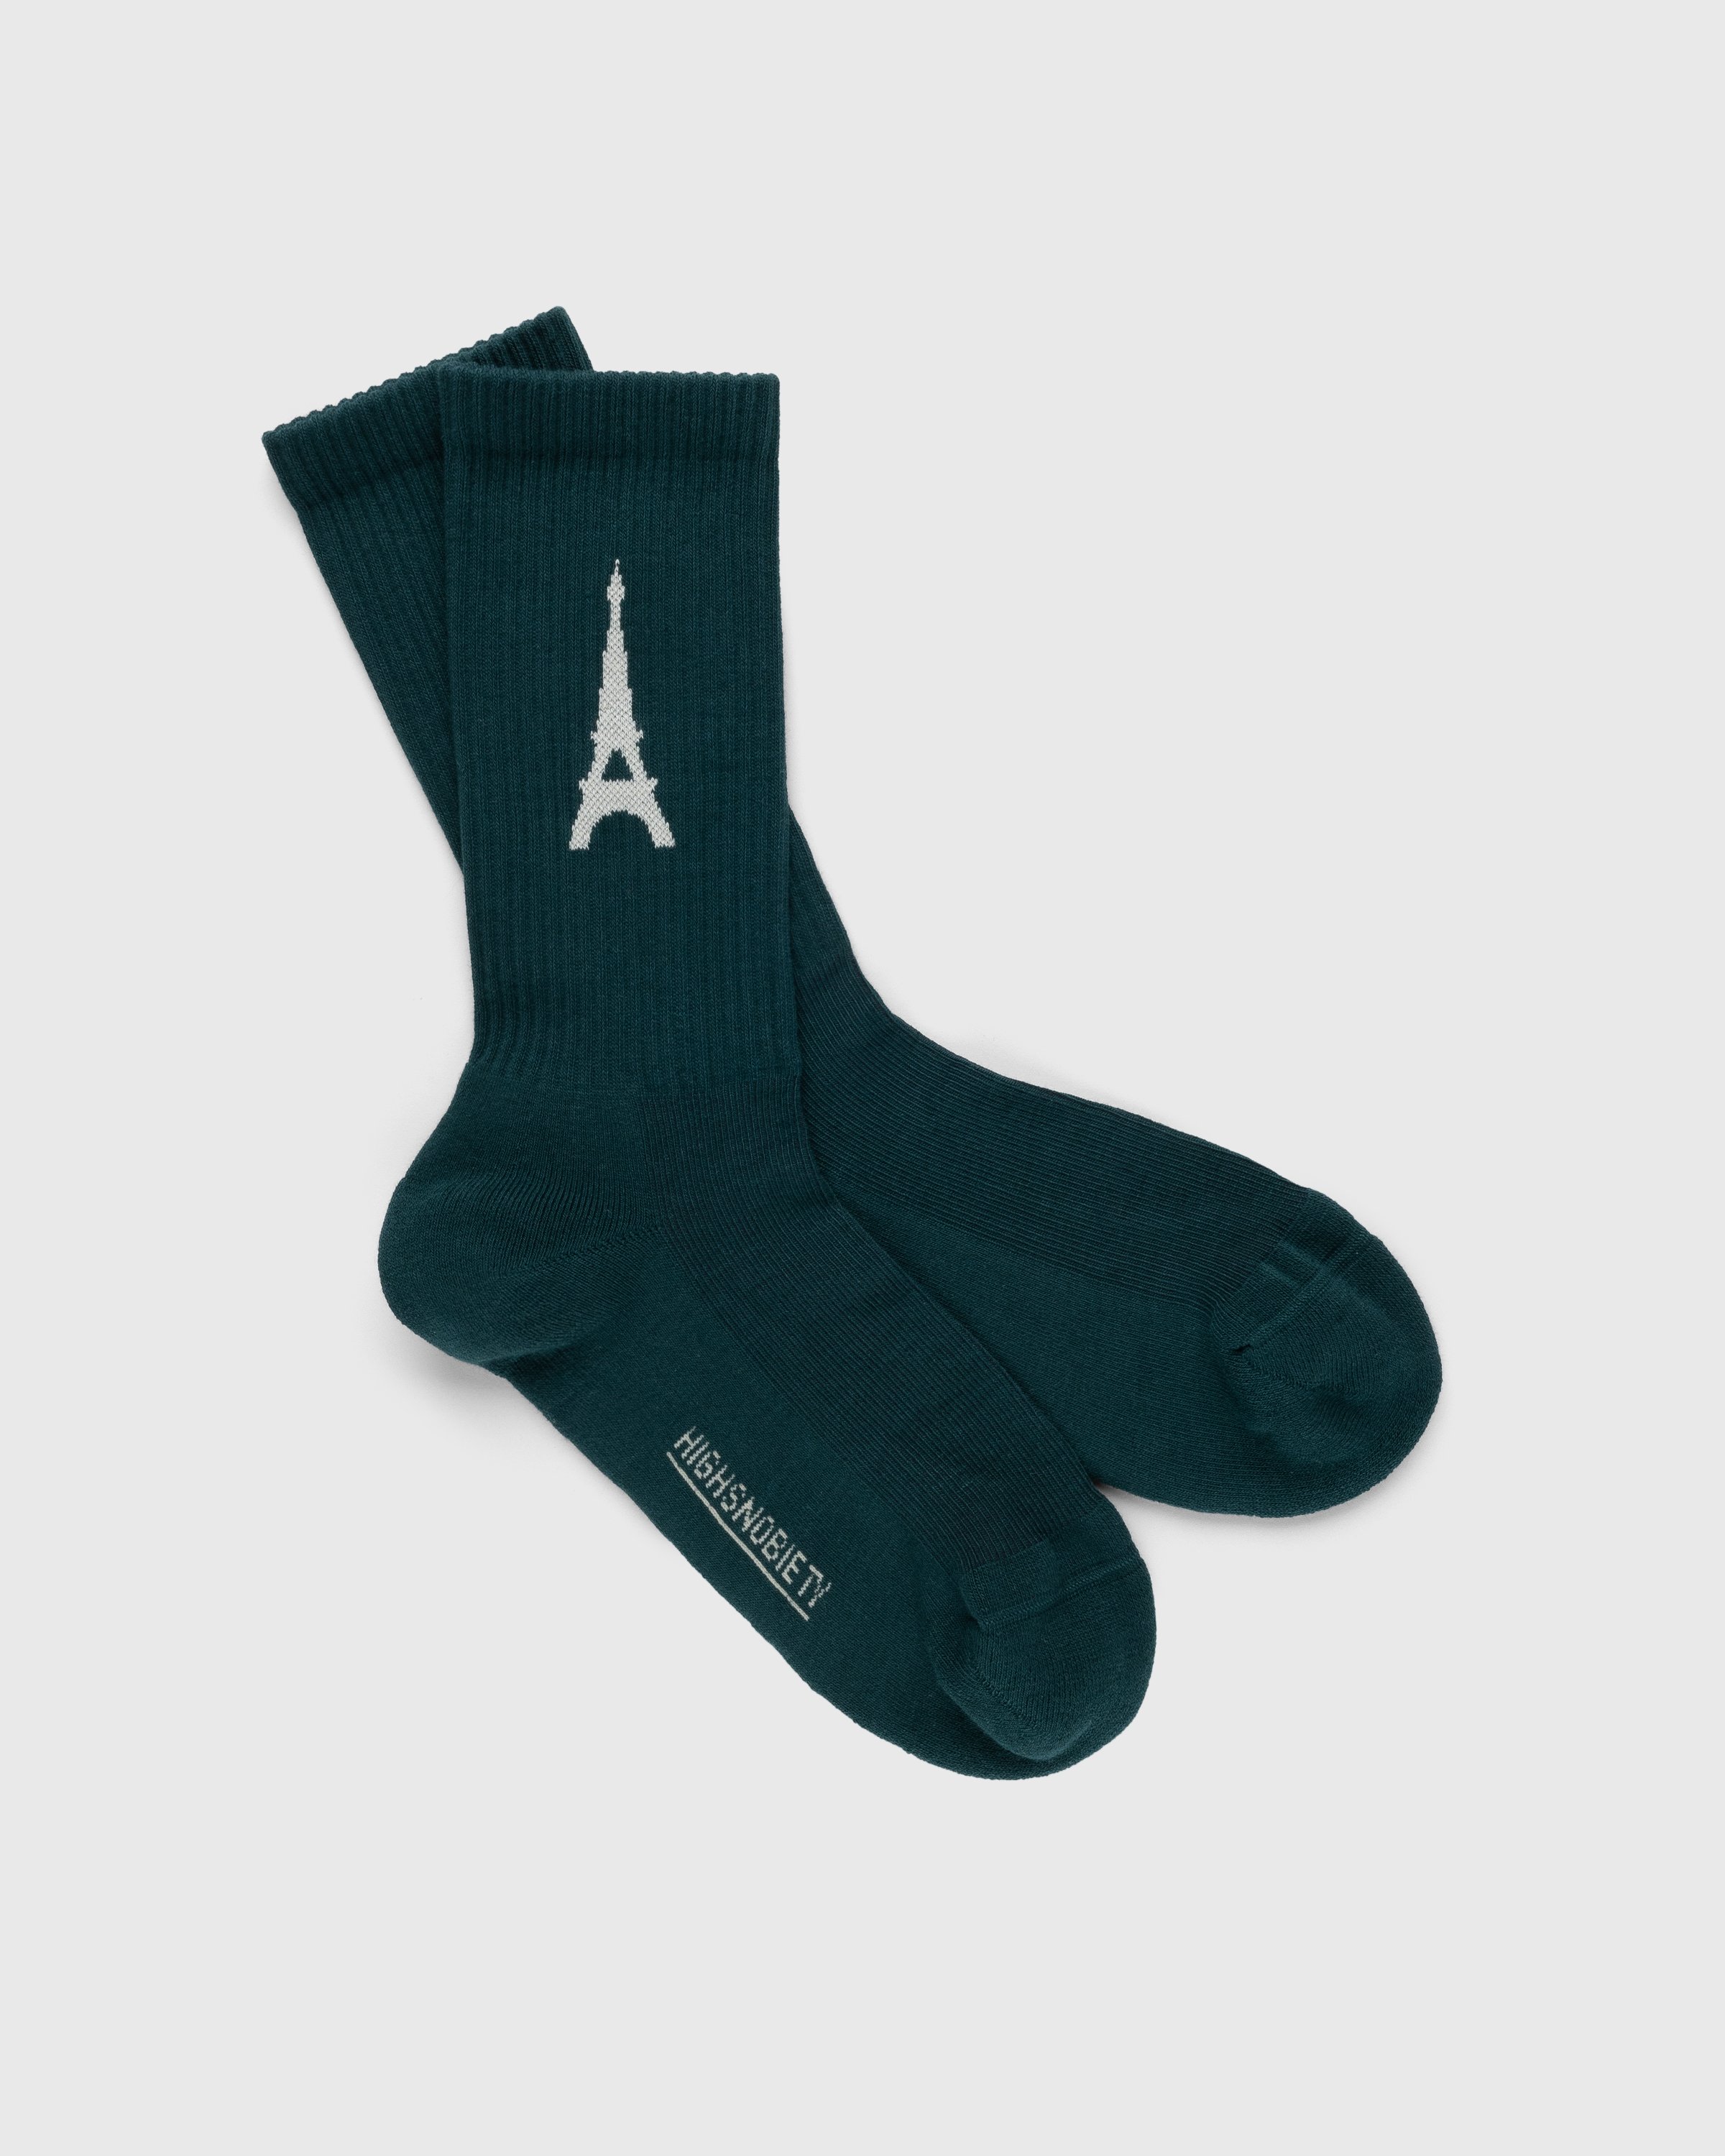 Highsnobiety - Not in Paris 5 Paris Socks Green - Accessories - Green - Image 1